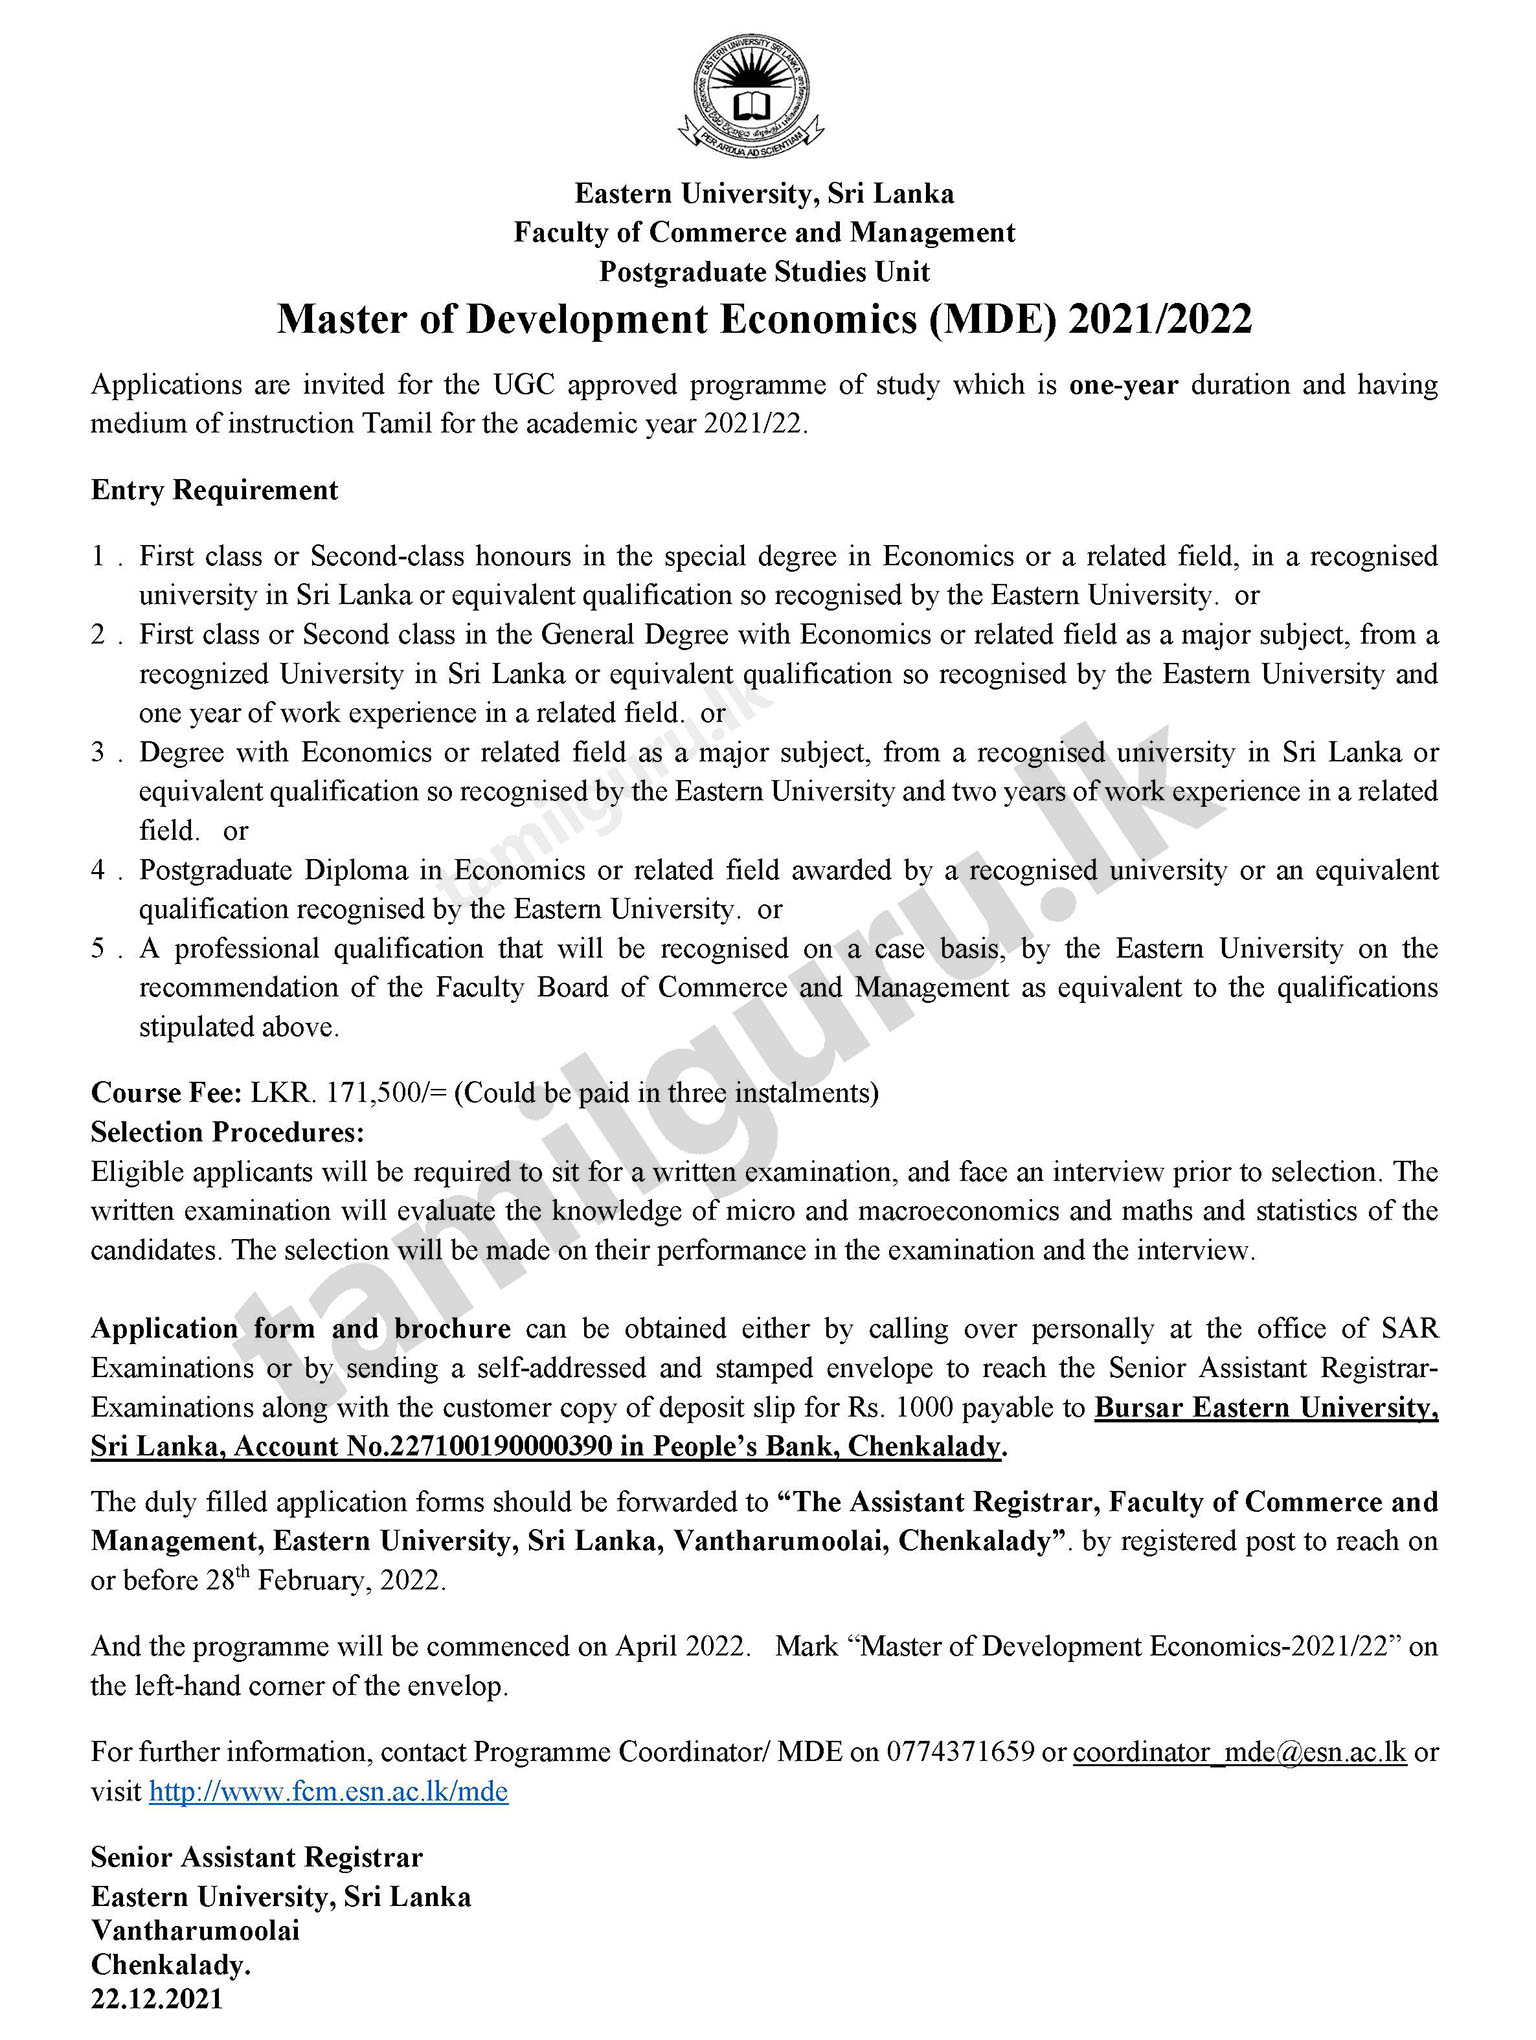 Master of Development Economics (MDE) 2021/2022 - Eastern University